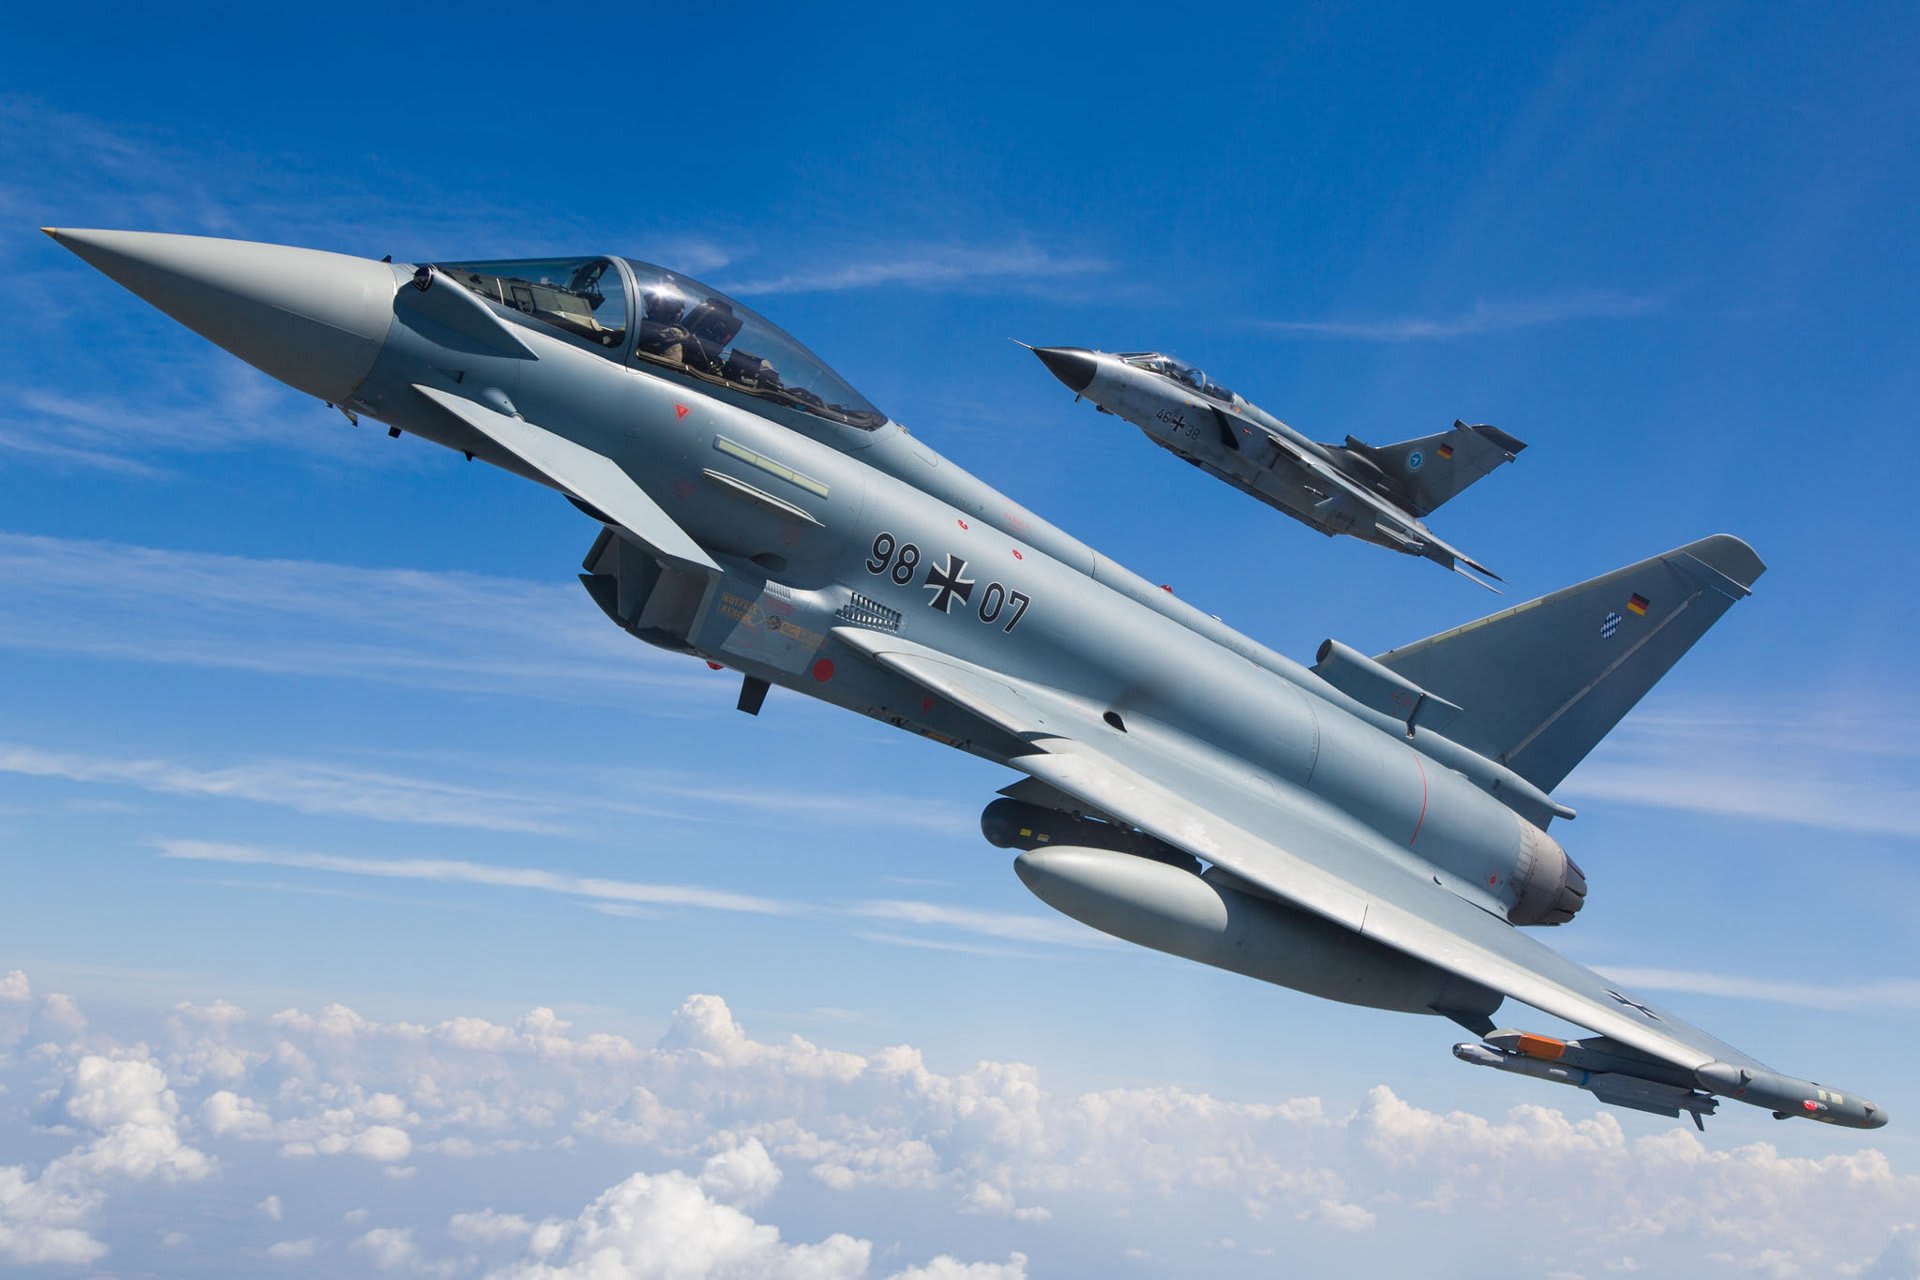 Eurofighter Typhoon (v popředí), Panavia Tornado (v pozadí) 